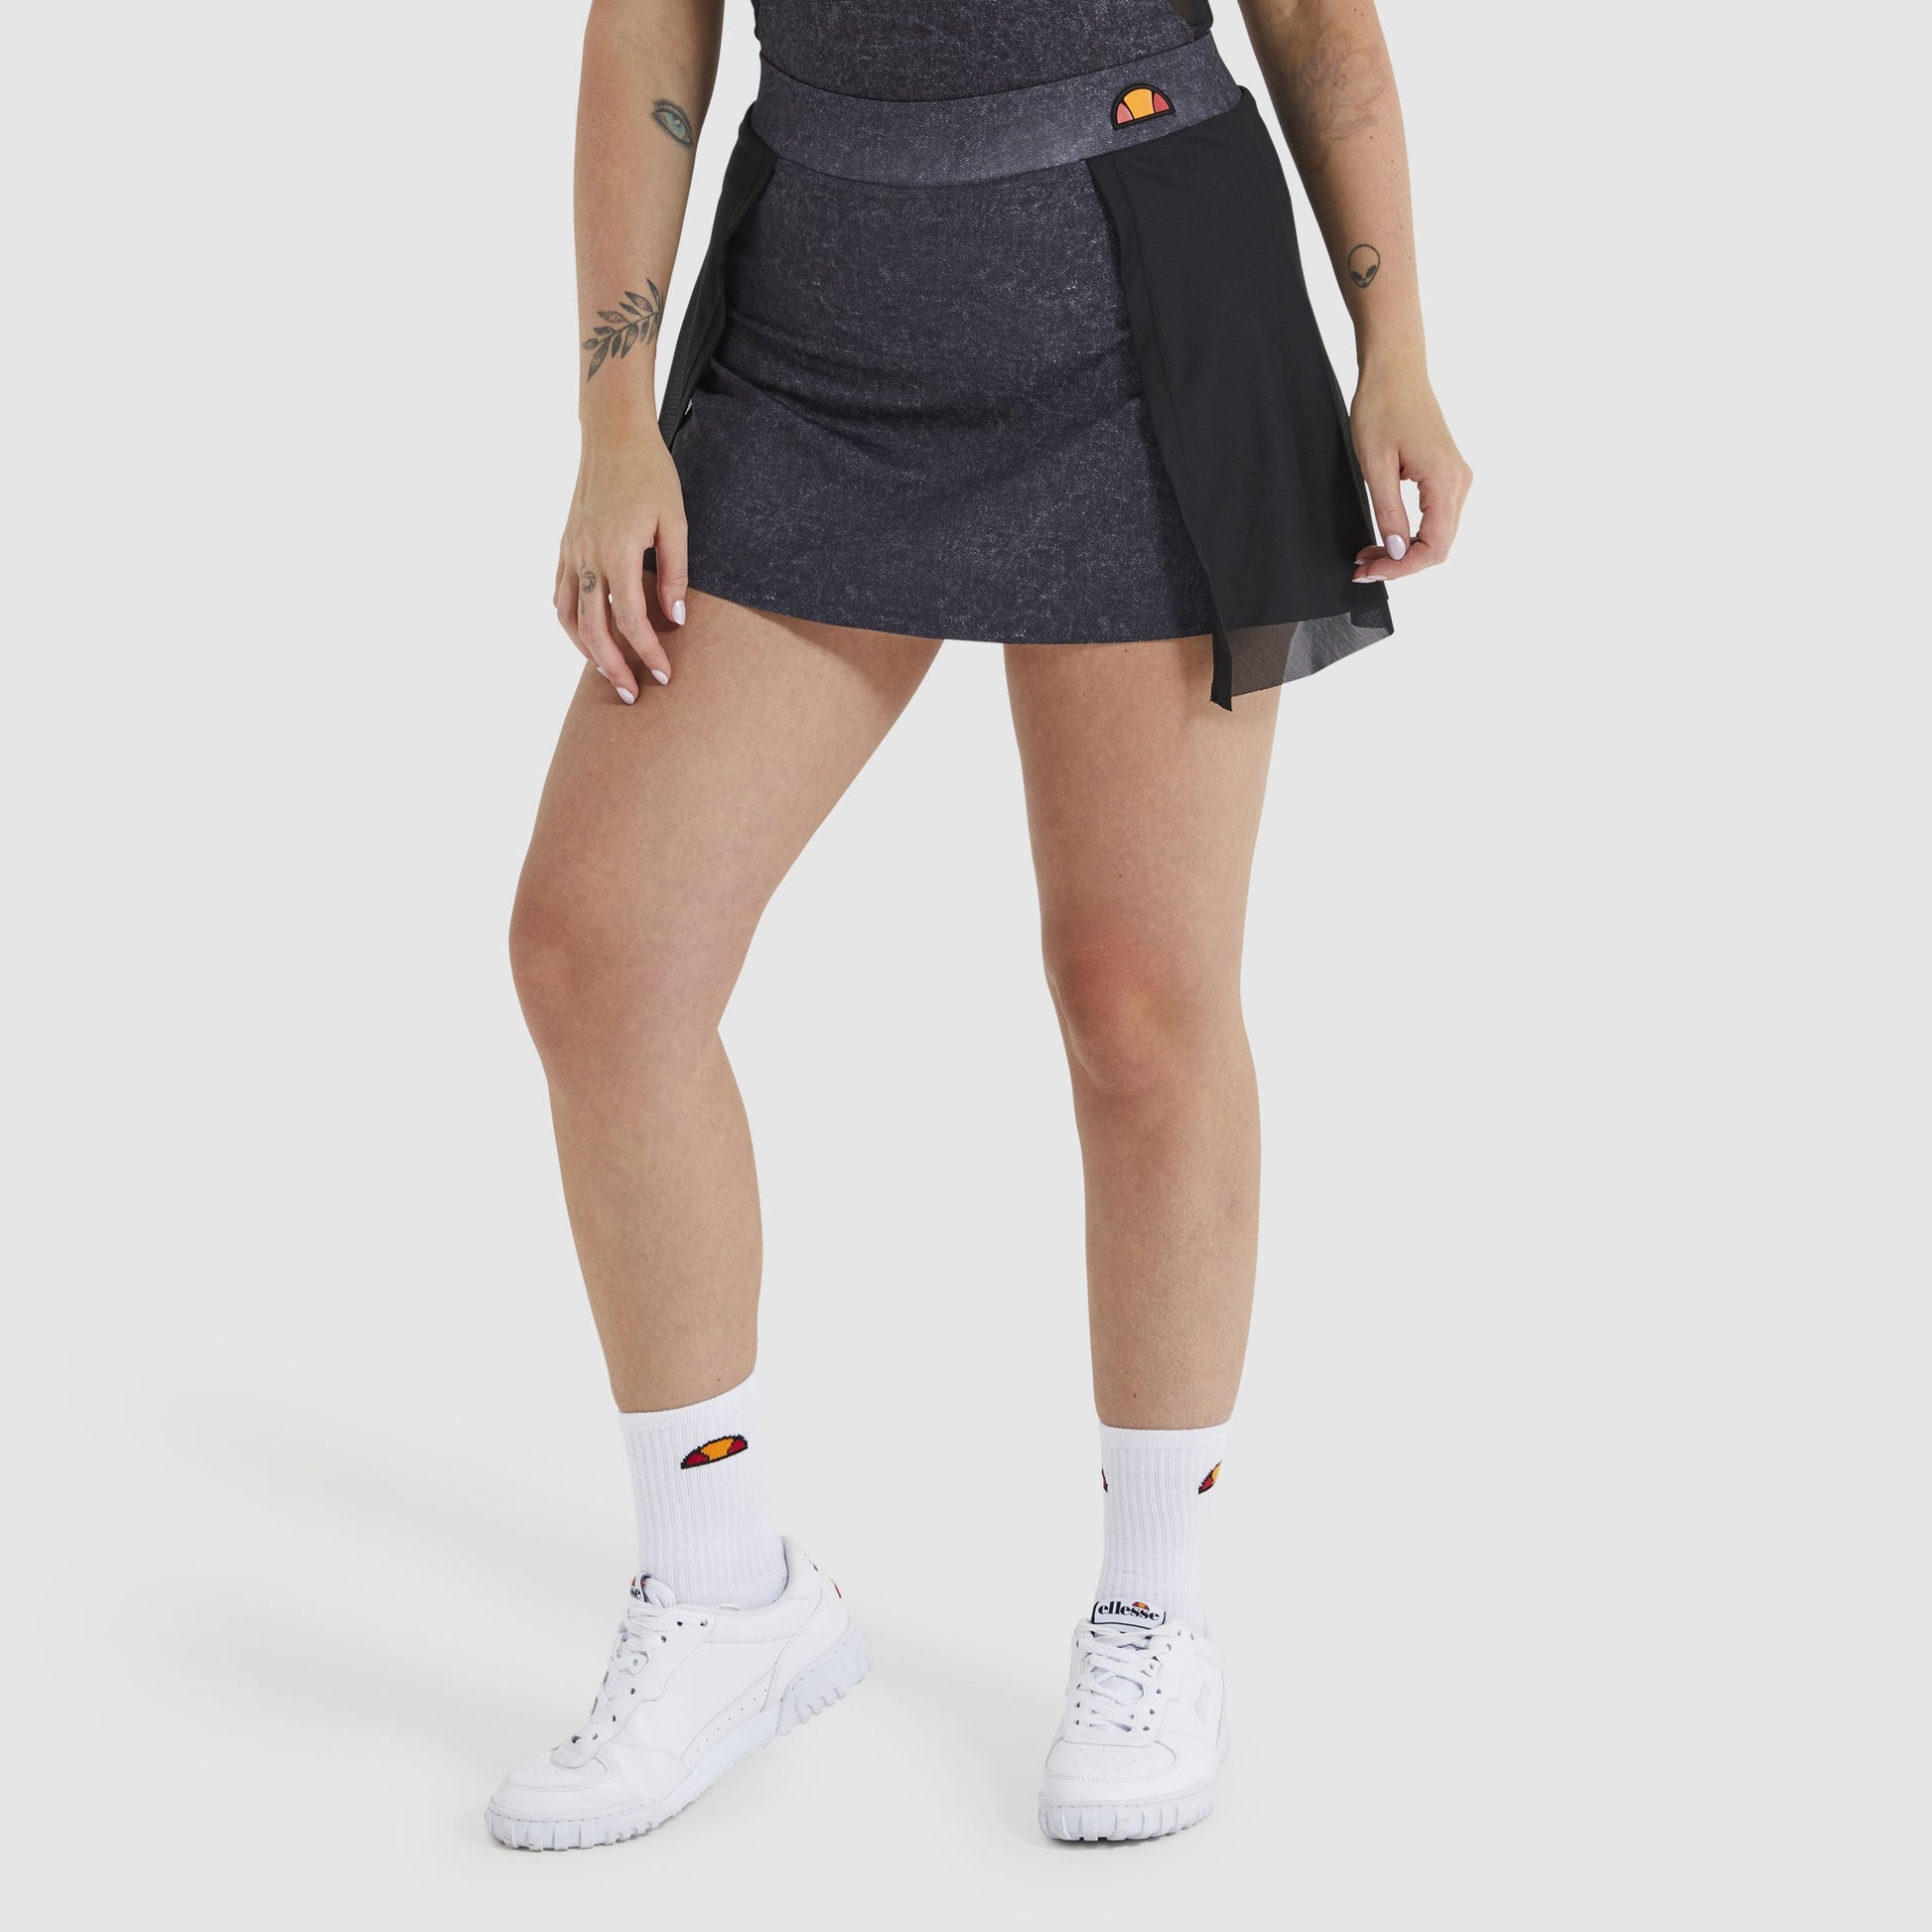 Brands NewCo ellesse Skort Women\'s – Tennis